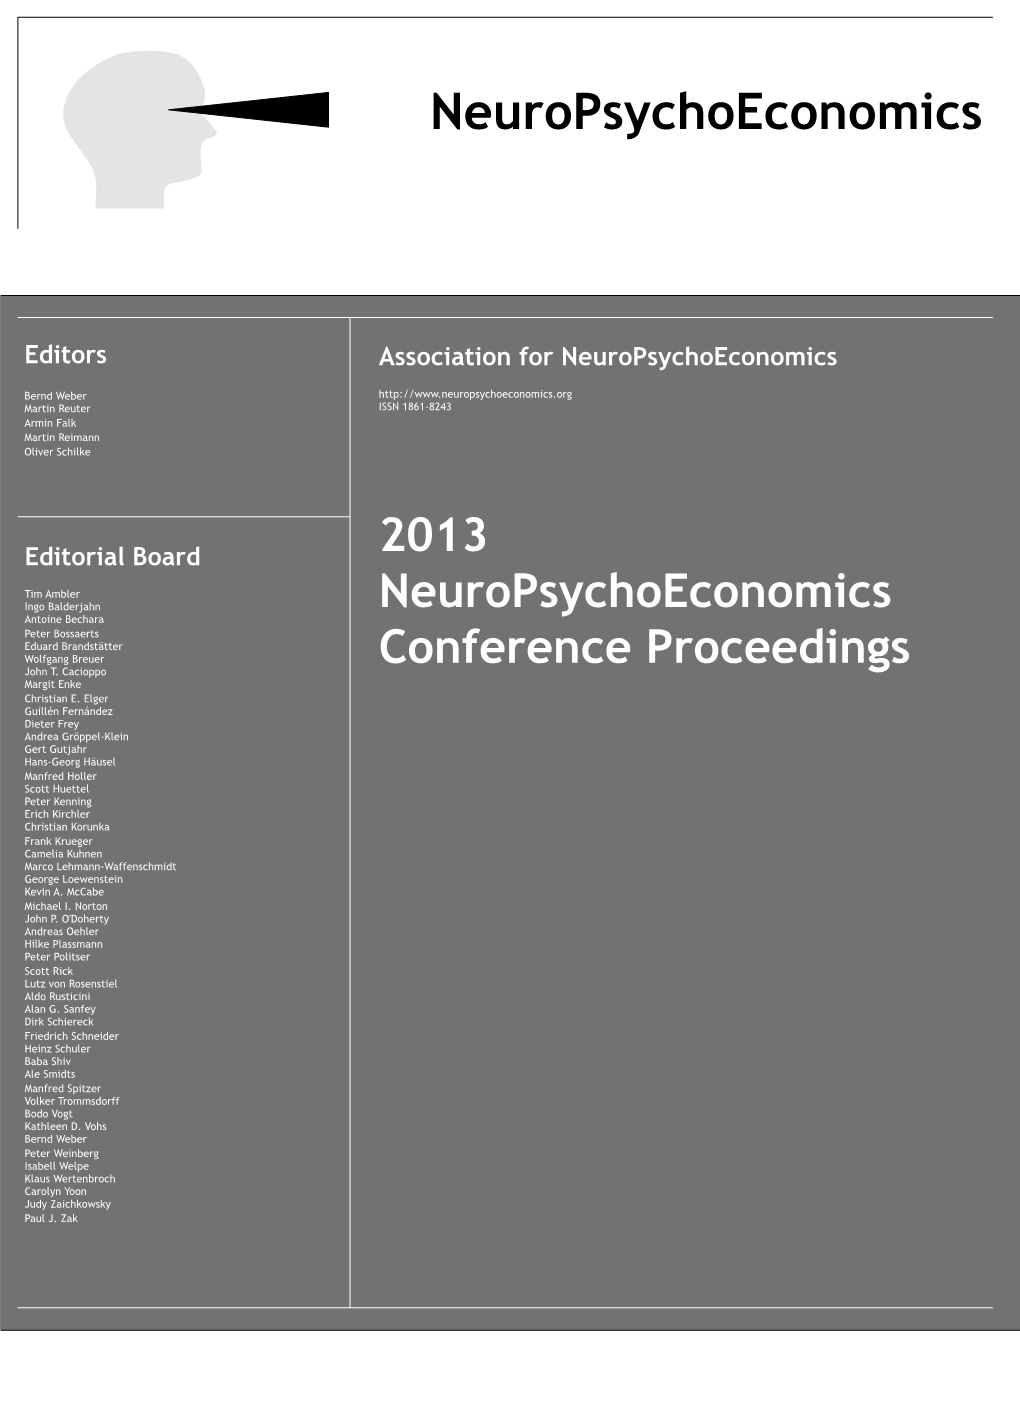 Neuropsychoeconomics Conference Program